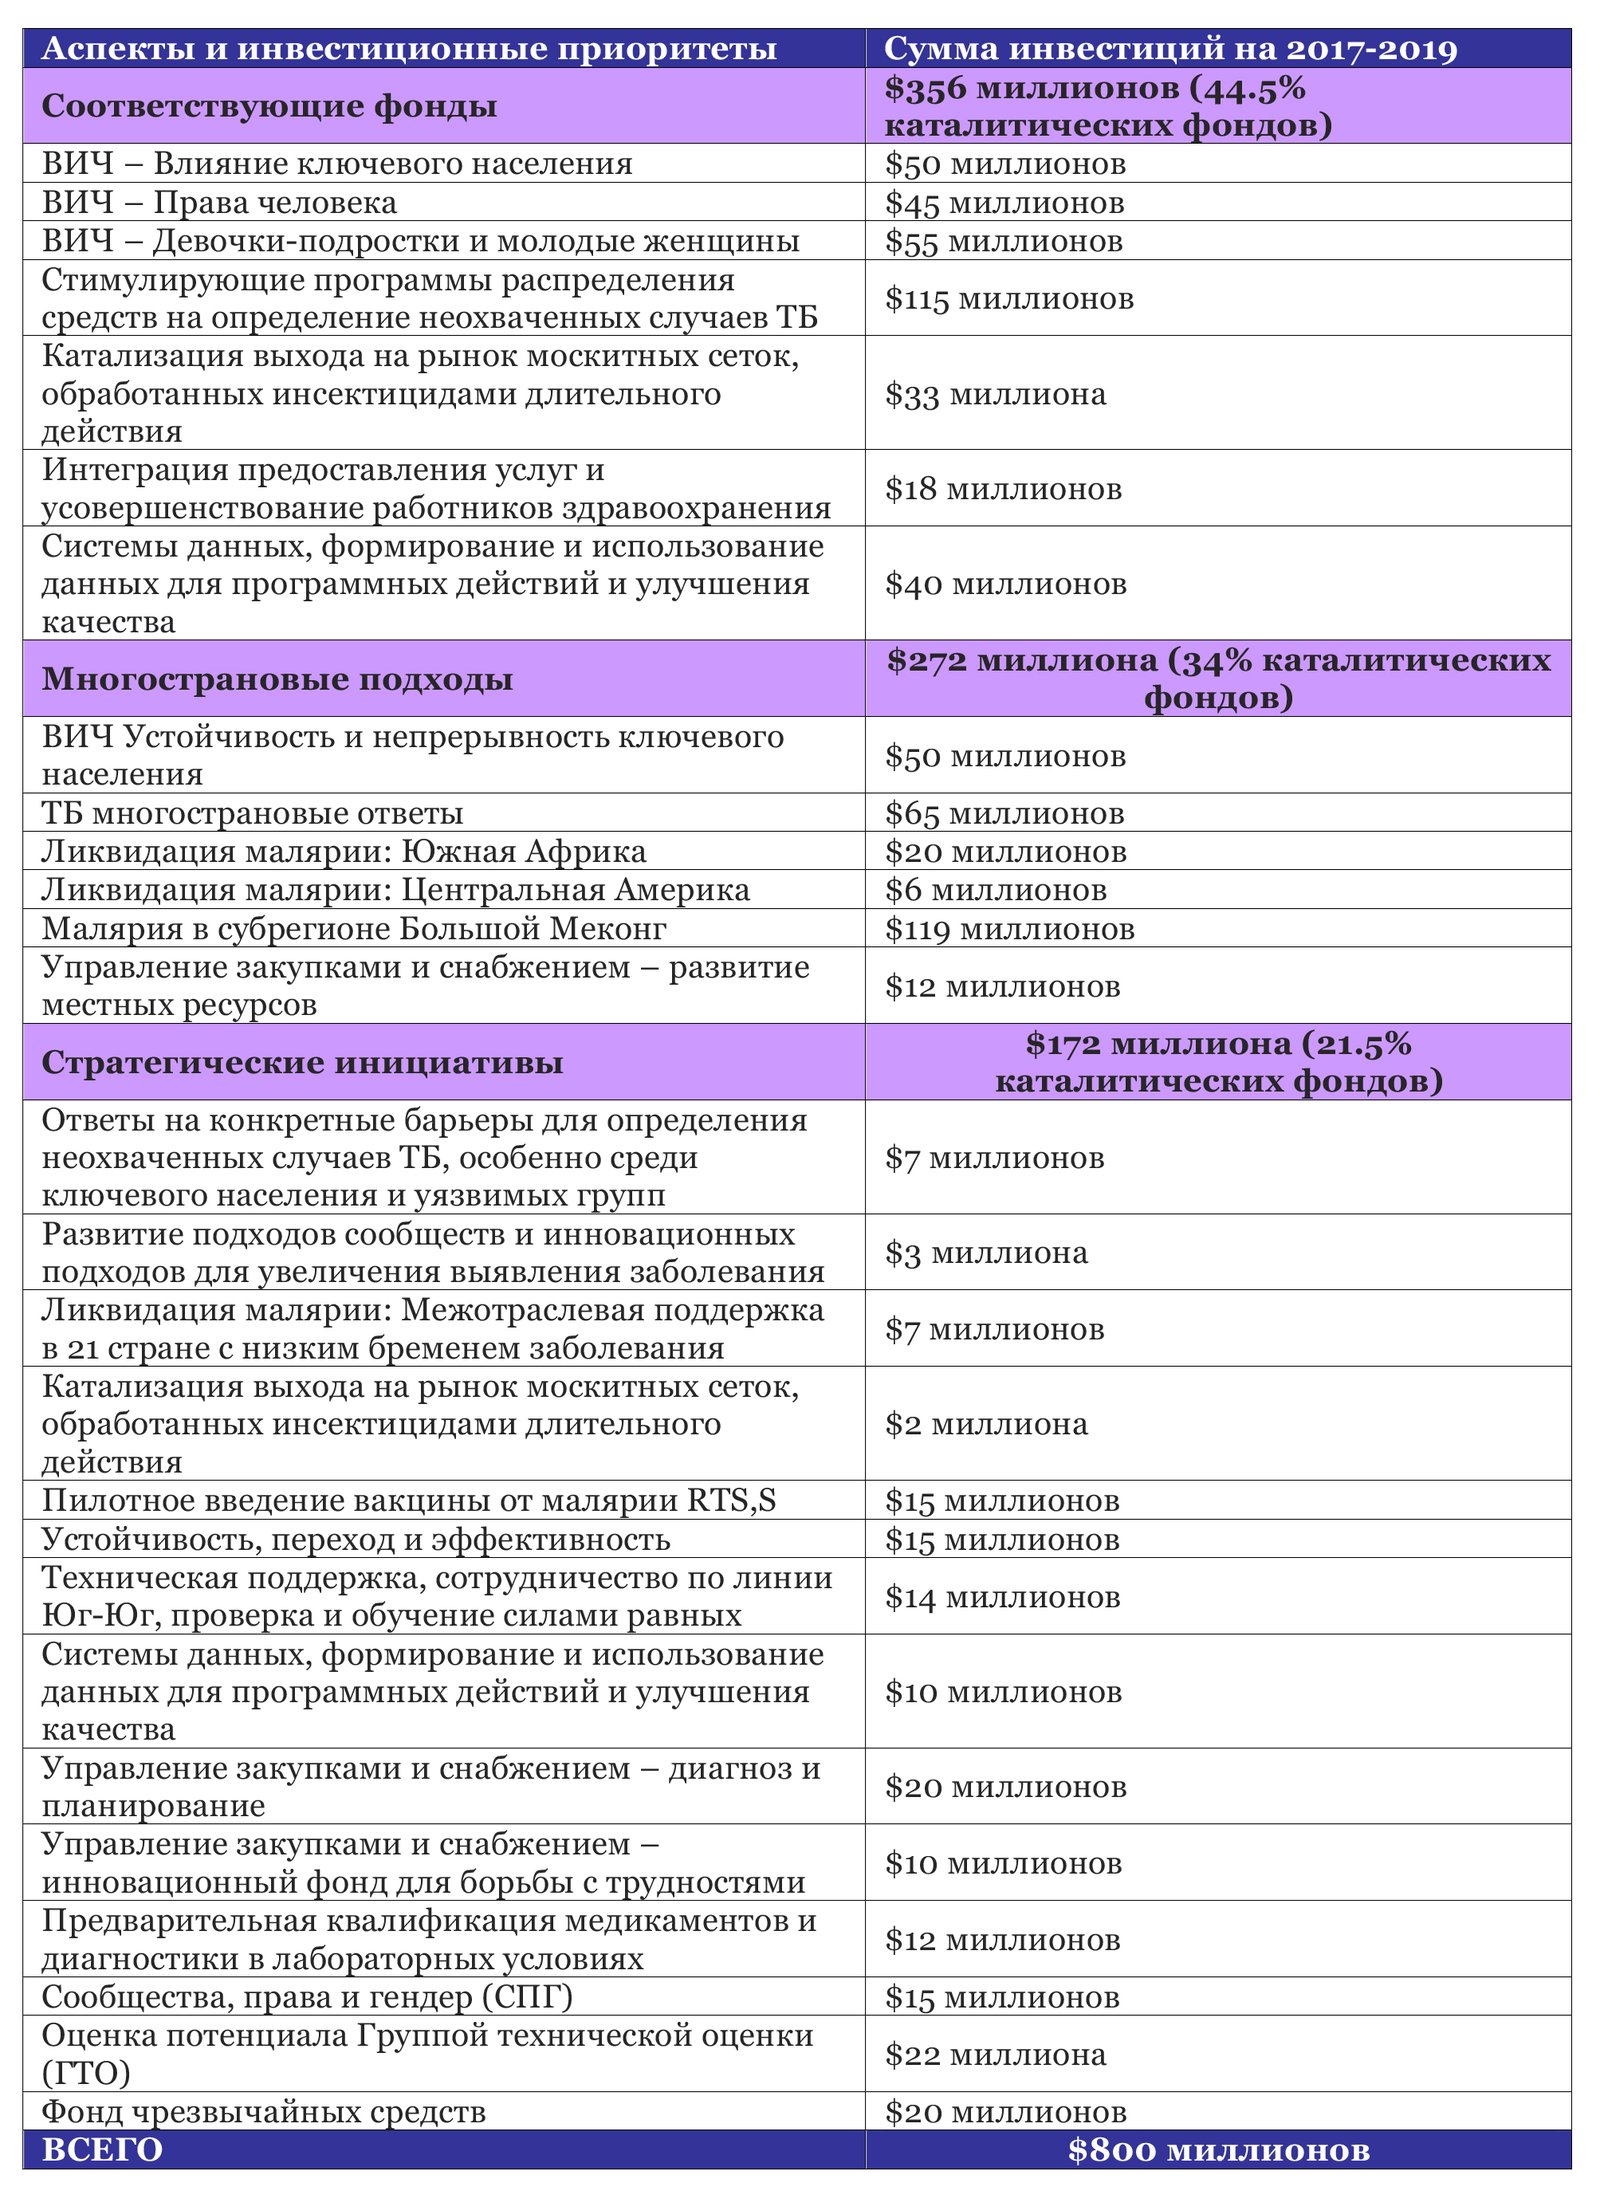 Microsoft Word - table 1 rus.docx